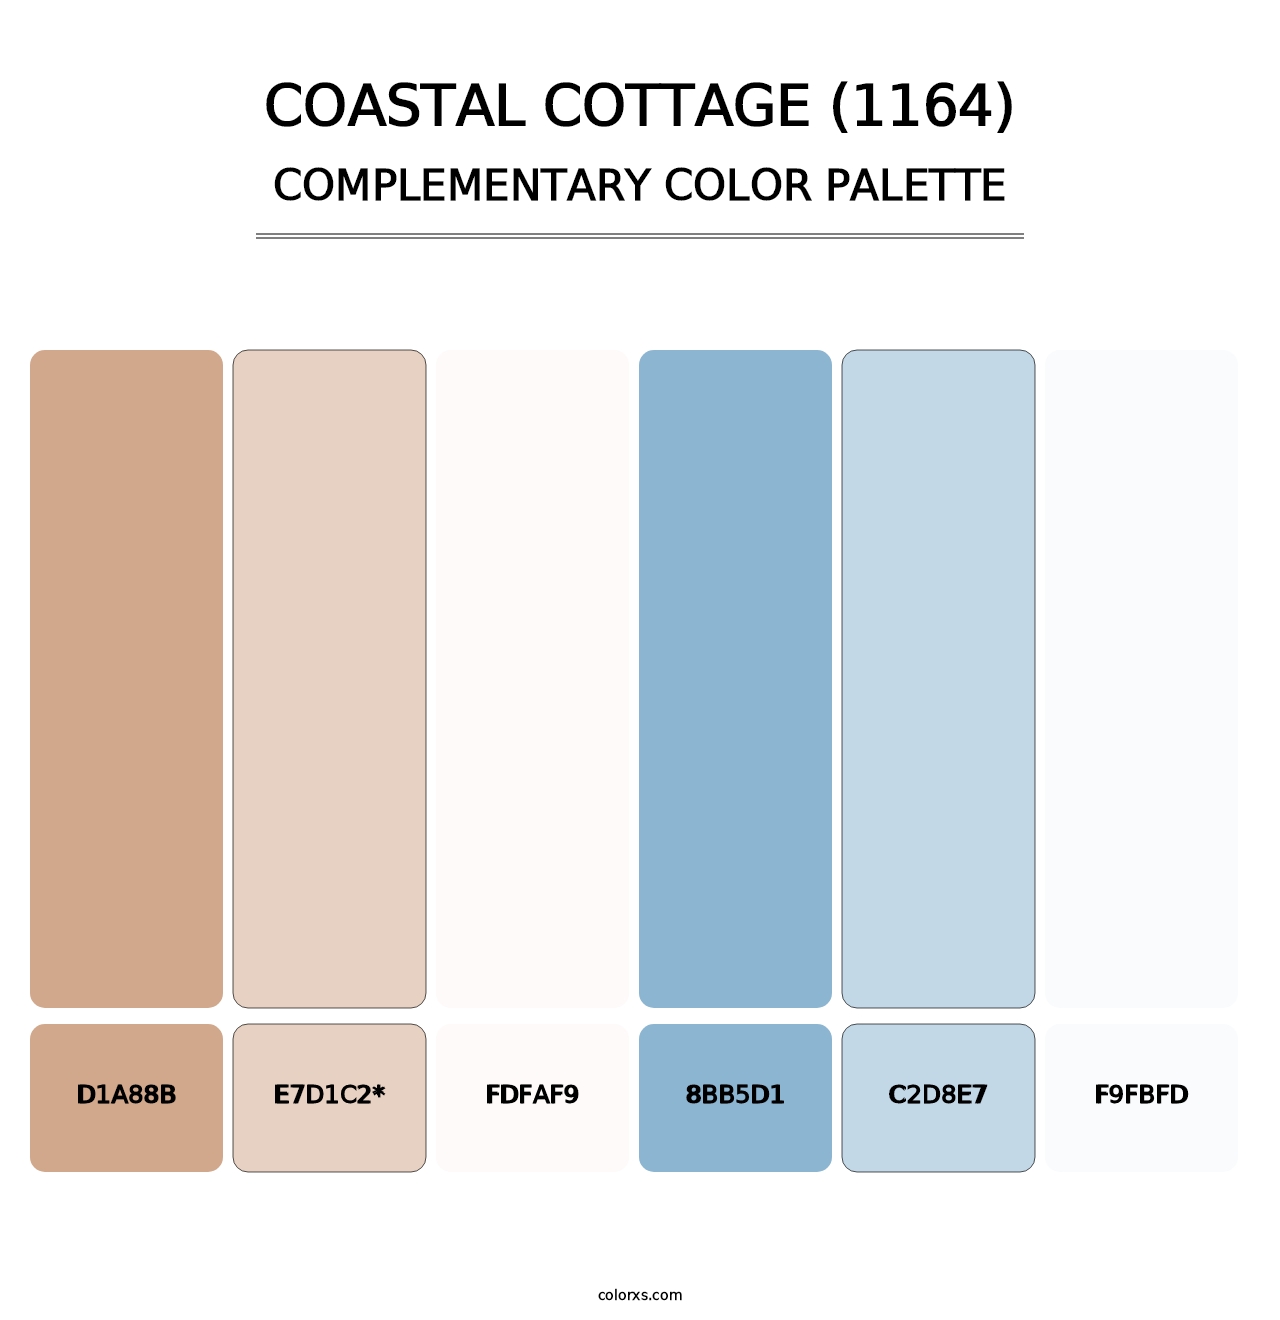 Coastal Cottage (1164) - Complementary Color Palette